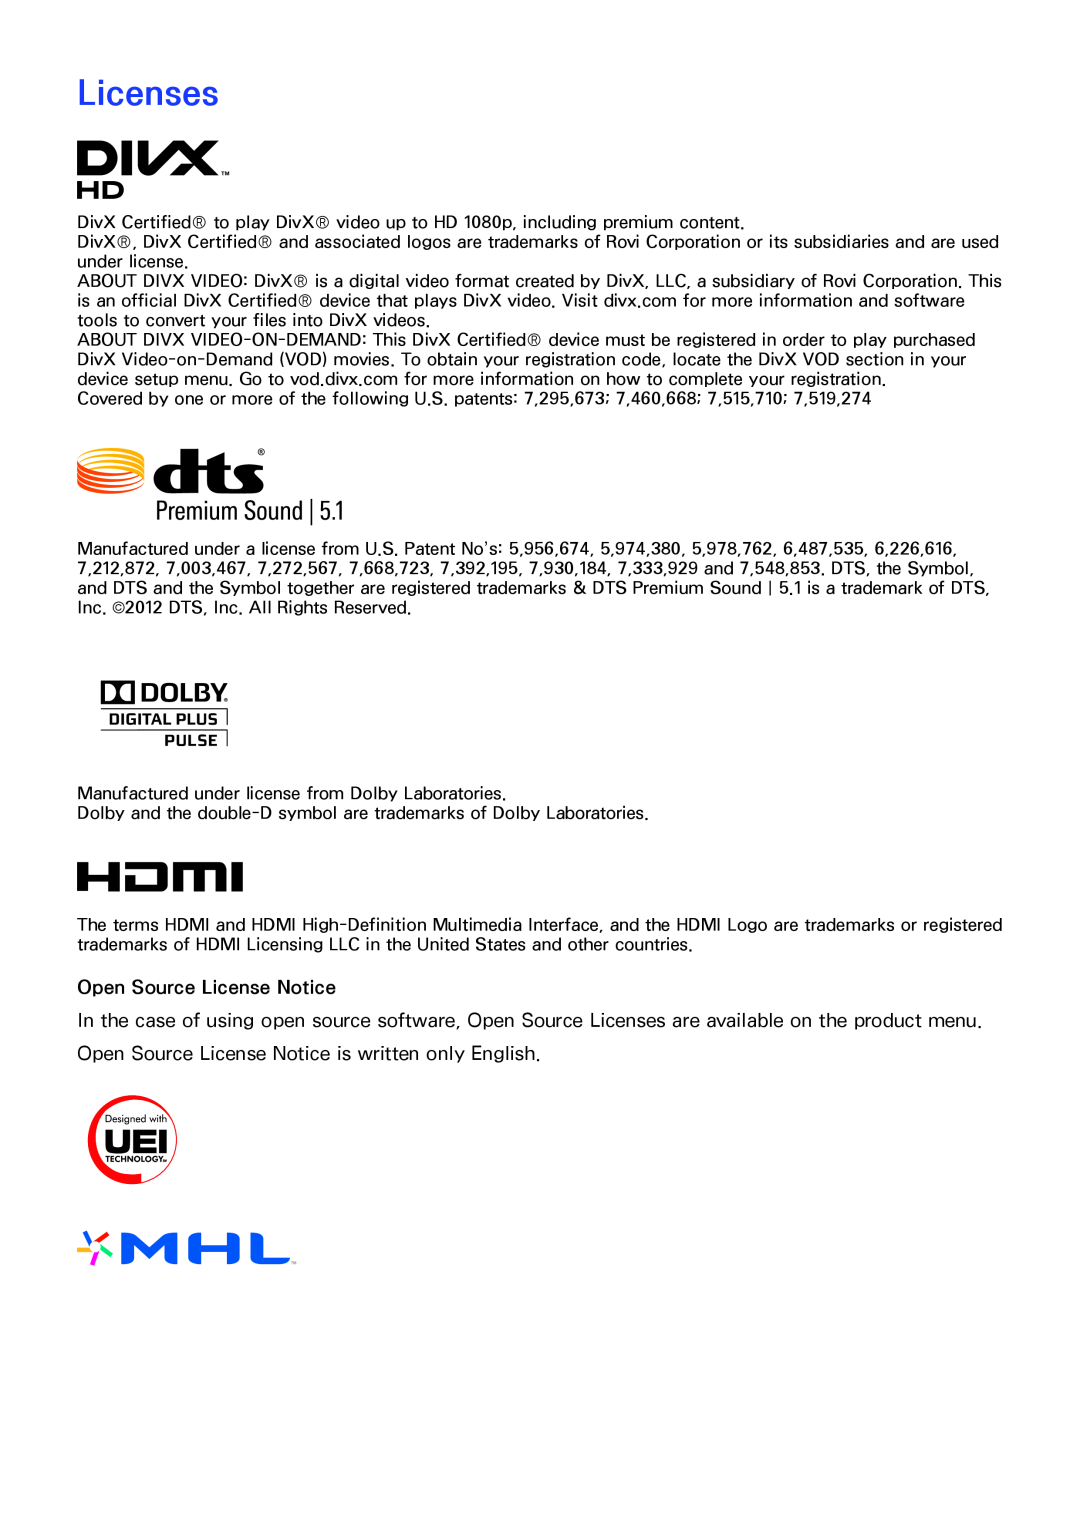 Samsung SEK-1000 manual Licenses, Open Source License Notice 